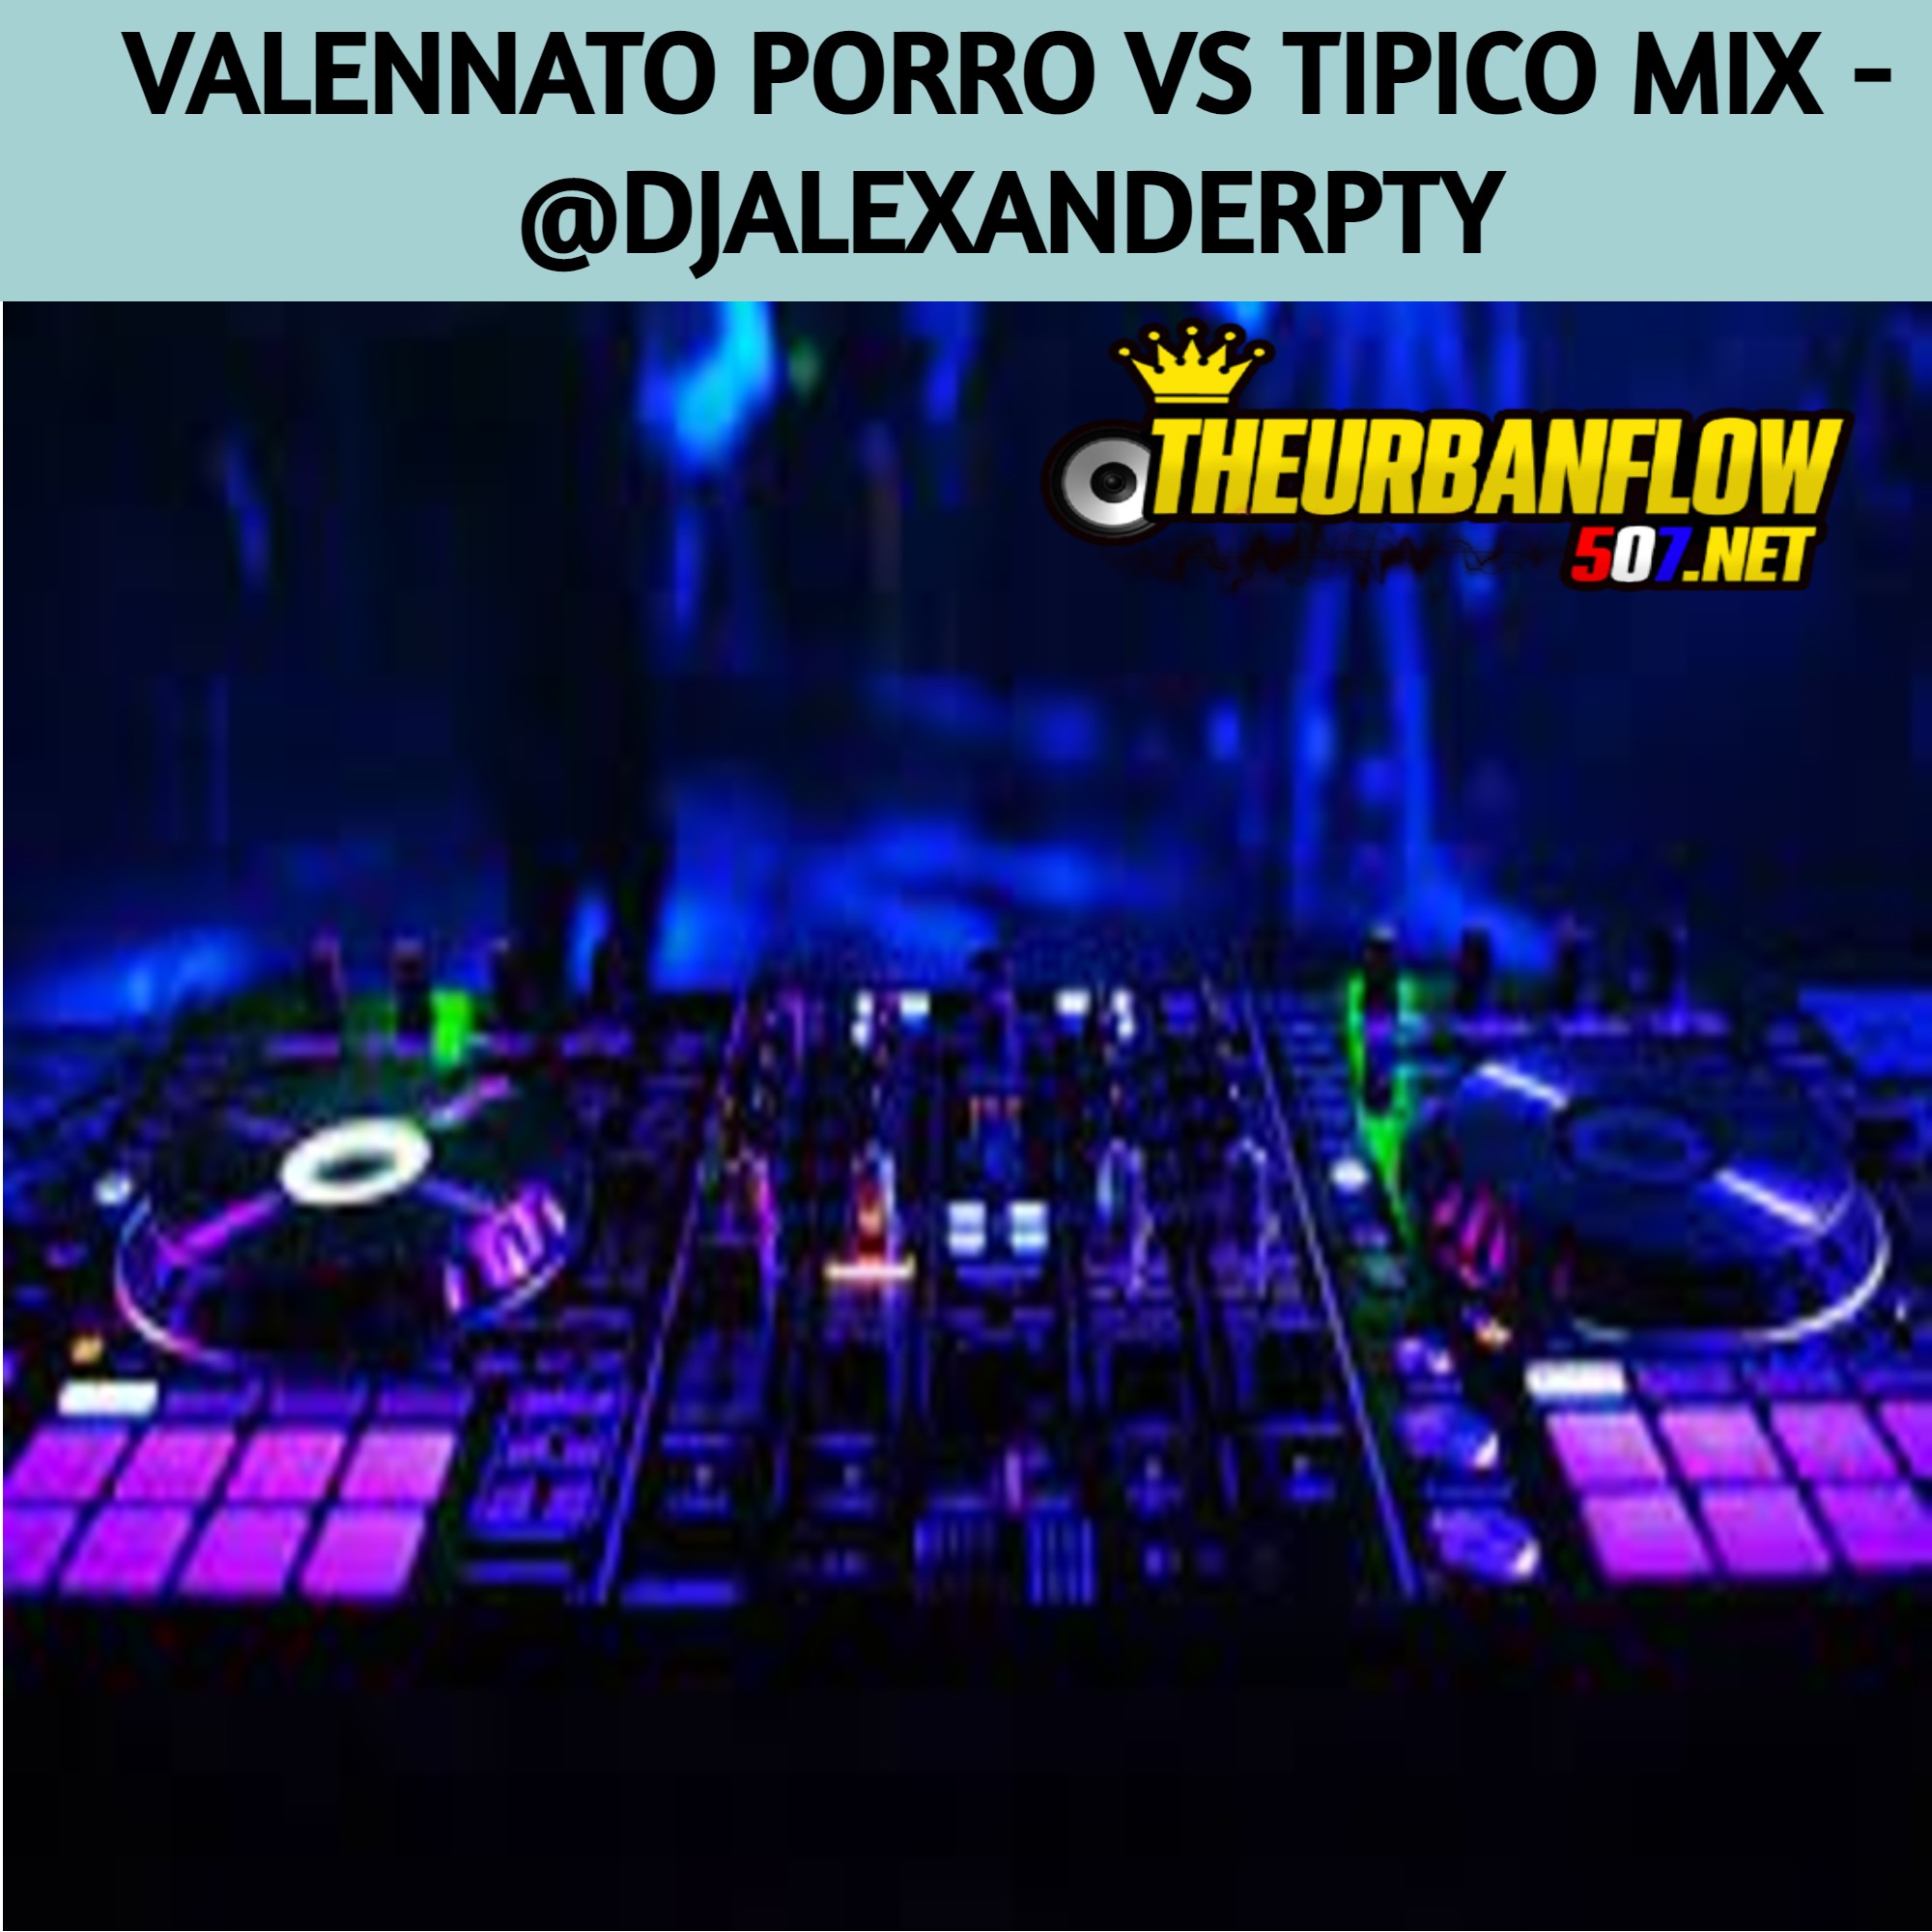 VALLENATO PORRO VS TIPICO MIX - @DJALEXANDERPTY